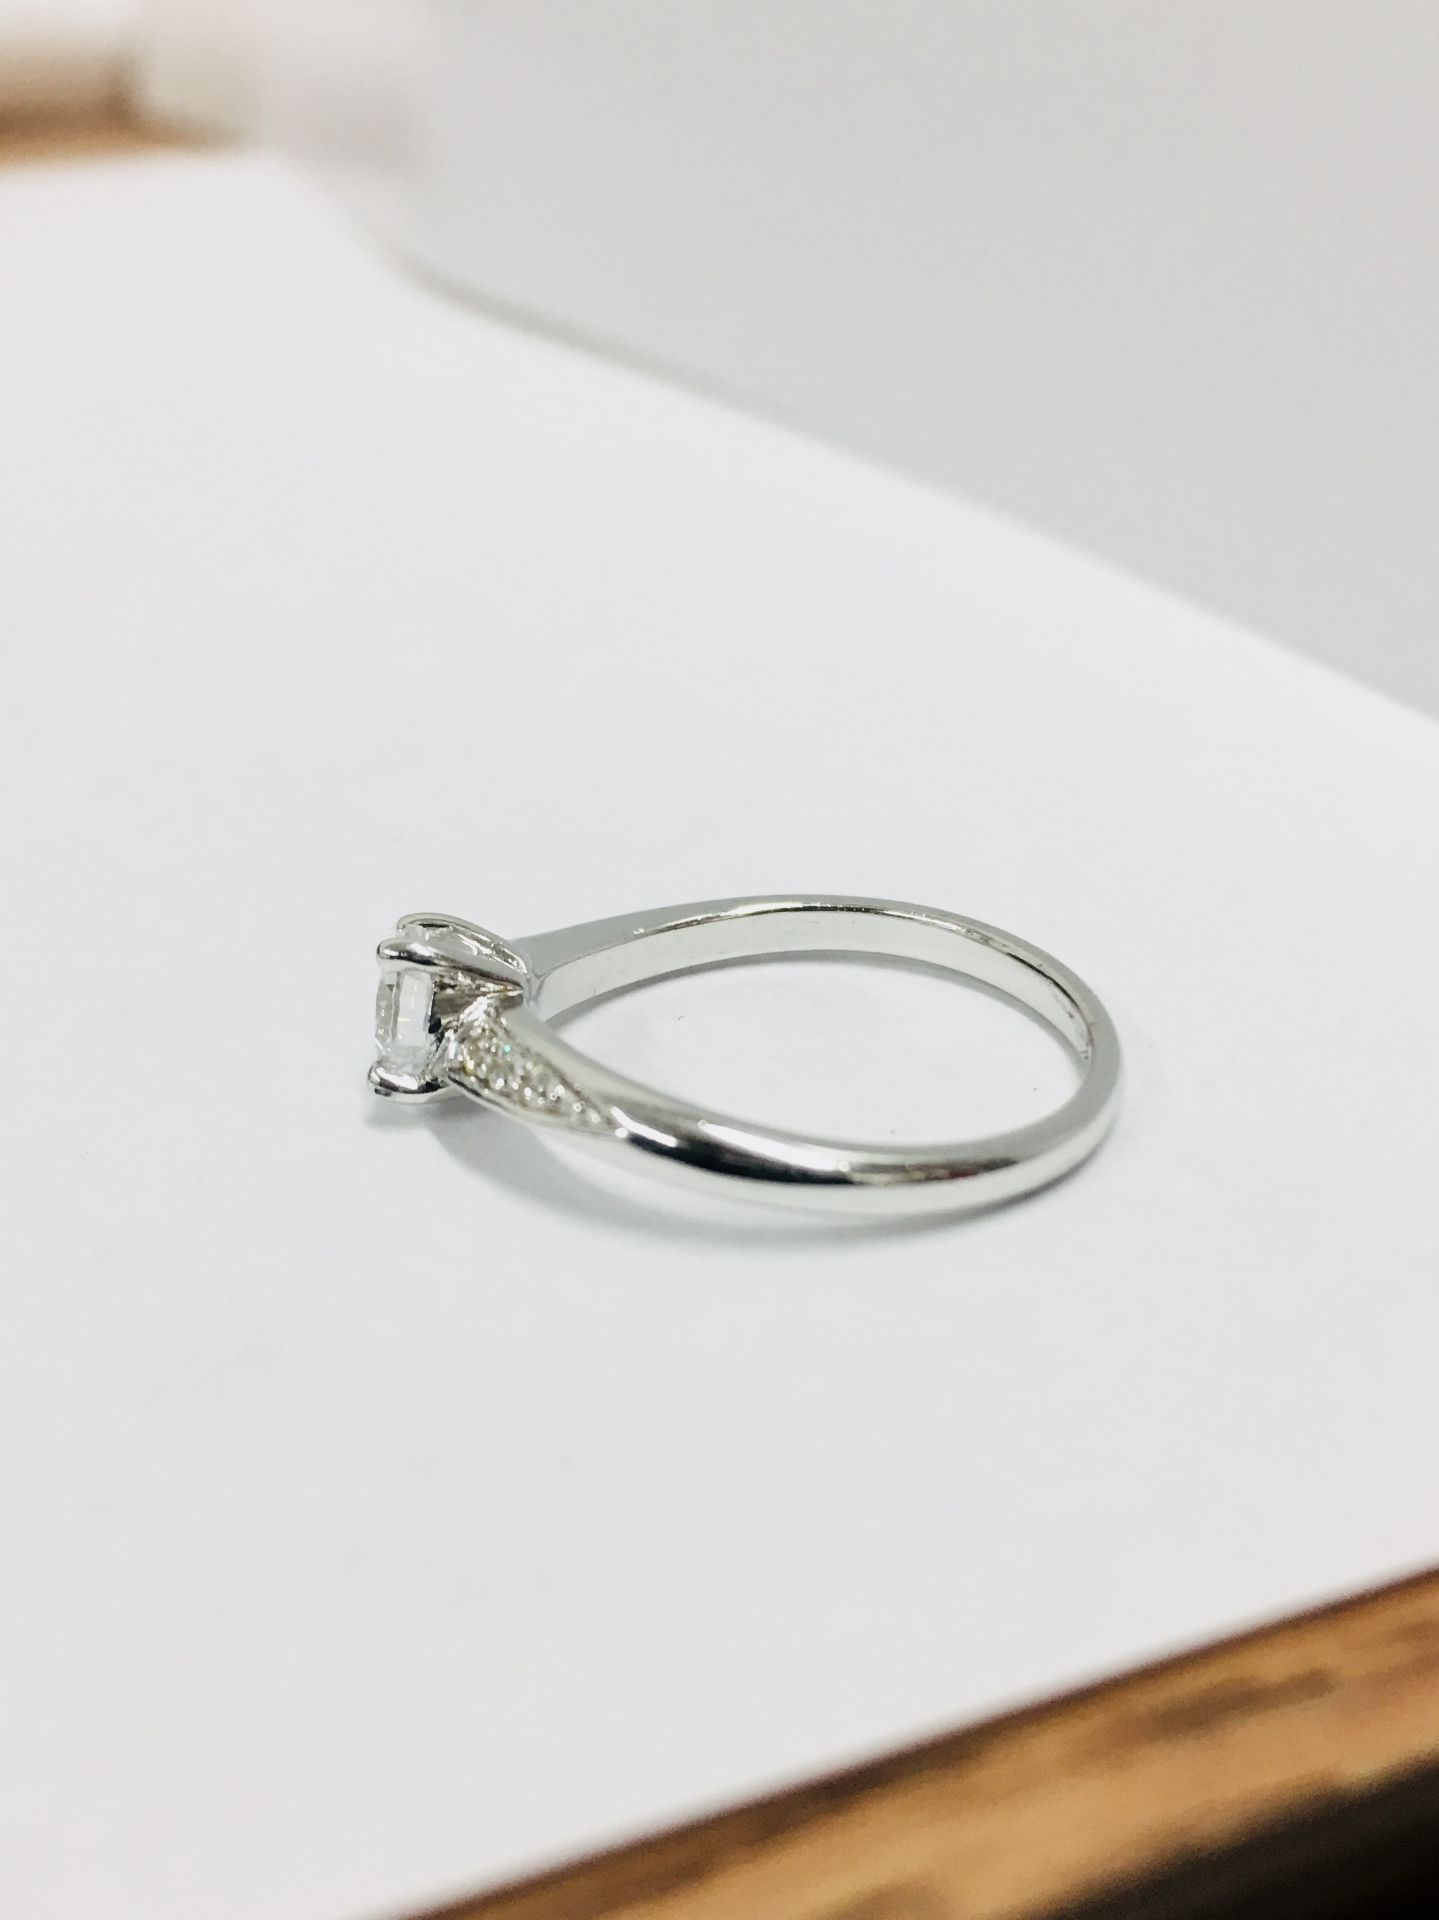 platinum damond solitaire ring,0.50ct brilliant cut diamond h colour vs clarity(clarity enhanced), - Image 2 of 3